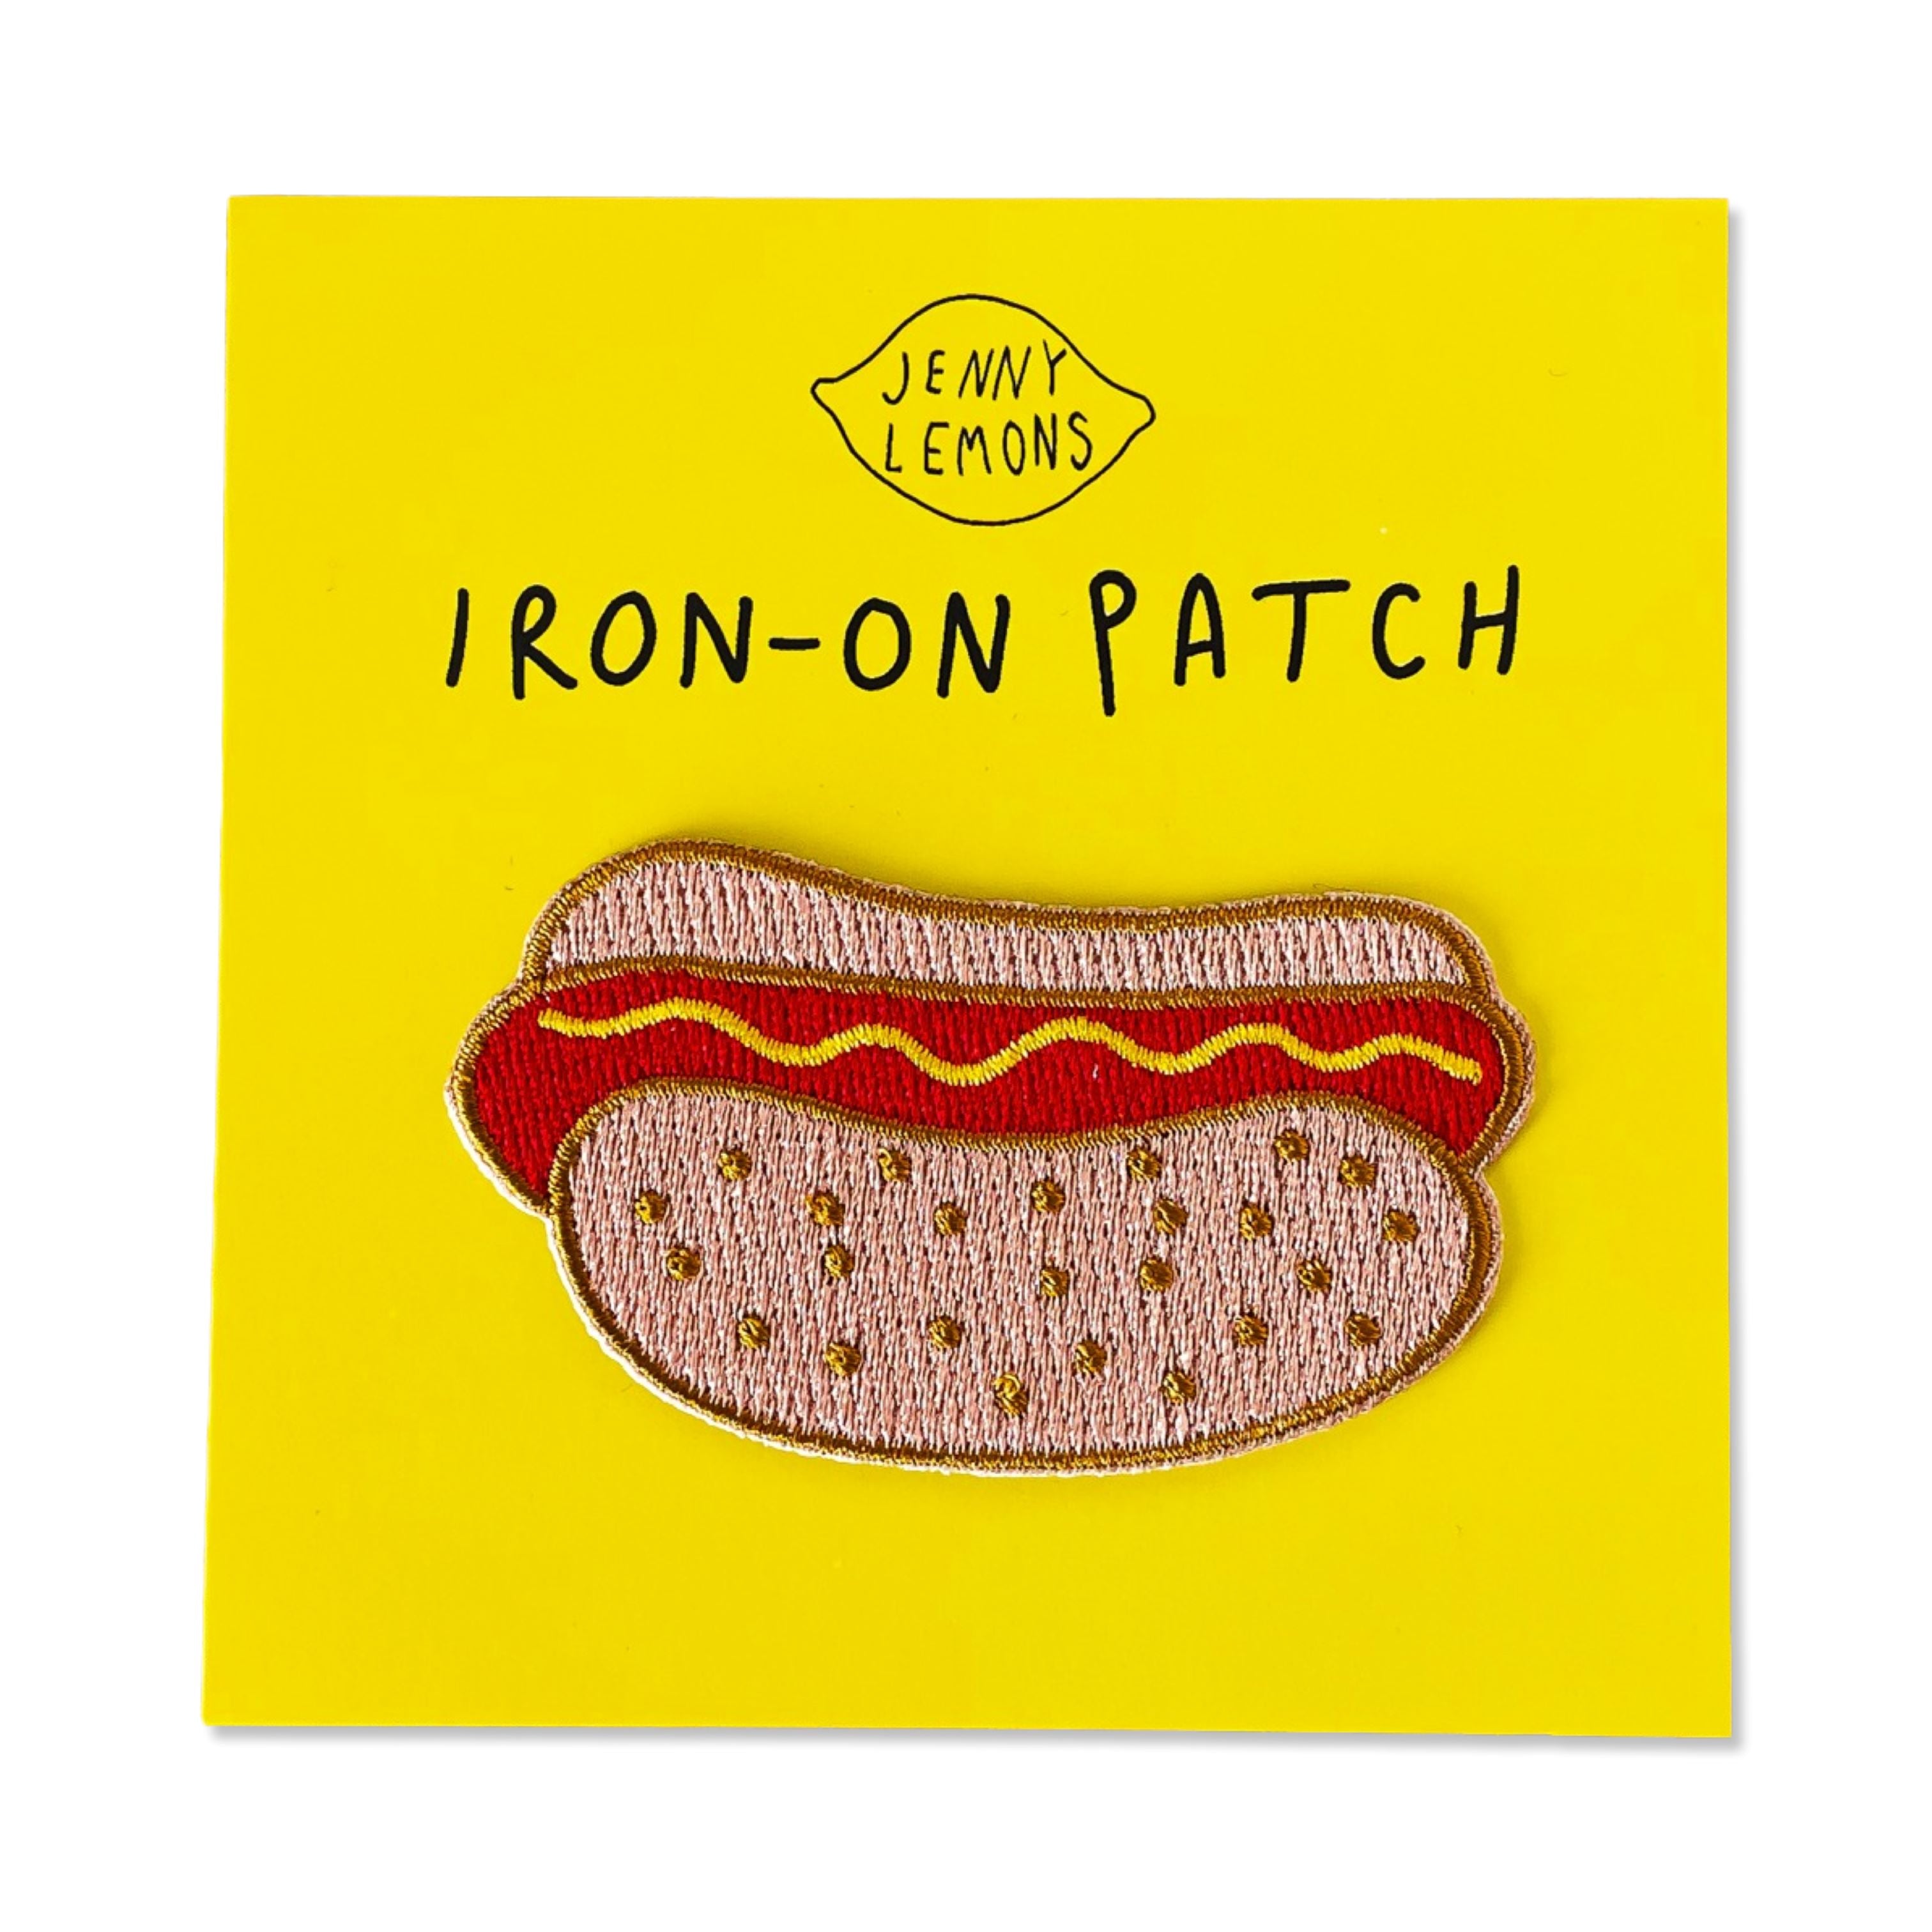 Hot Dog Iron-on Patch